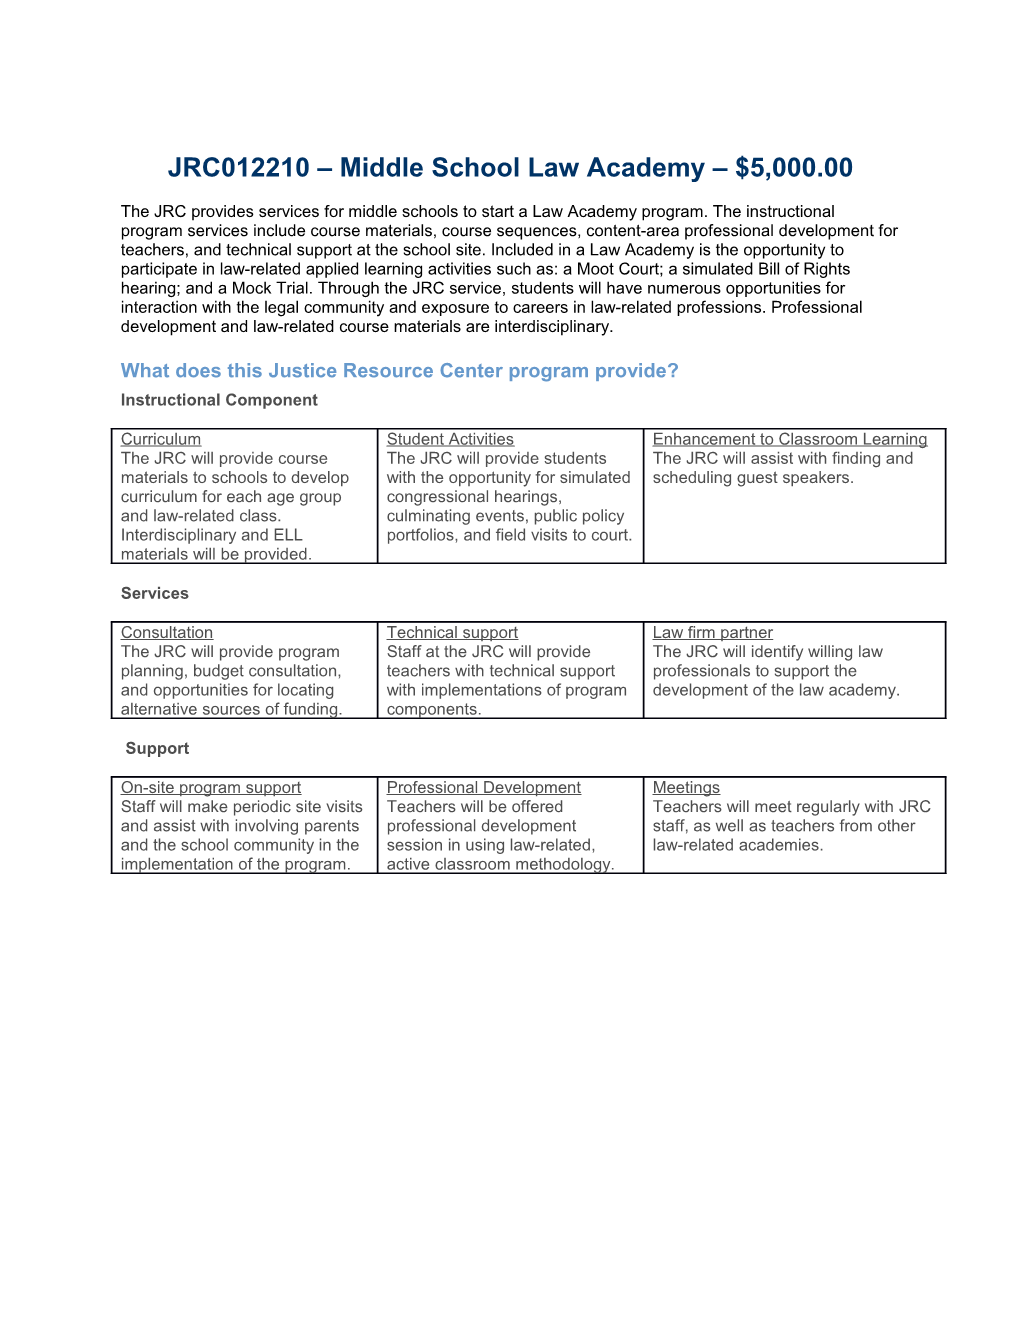 JRC012210 Middle School Law Academy $5,000.00